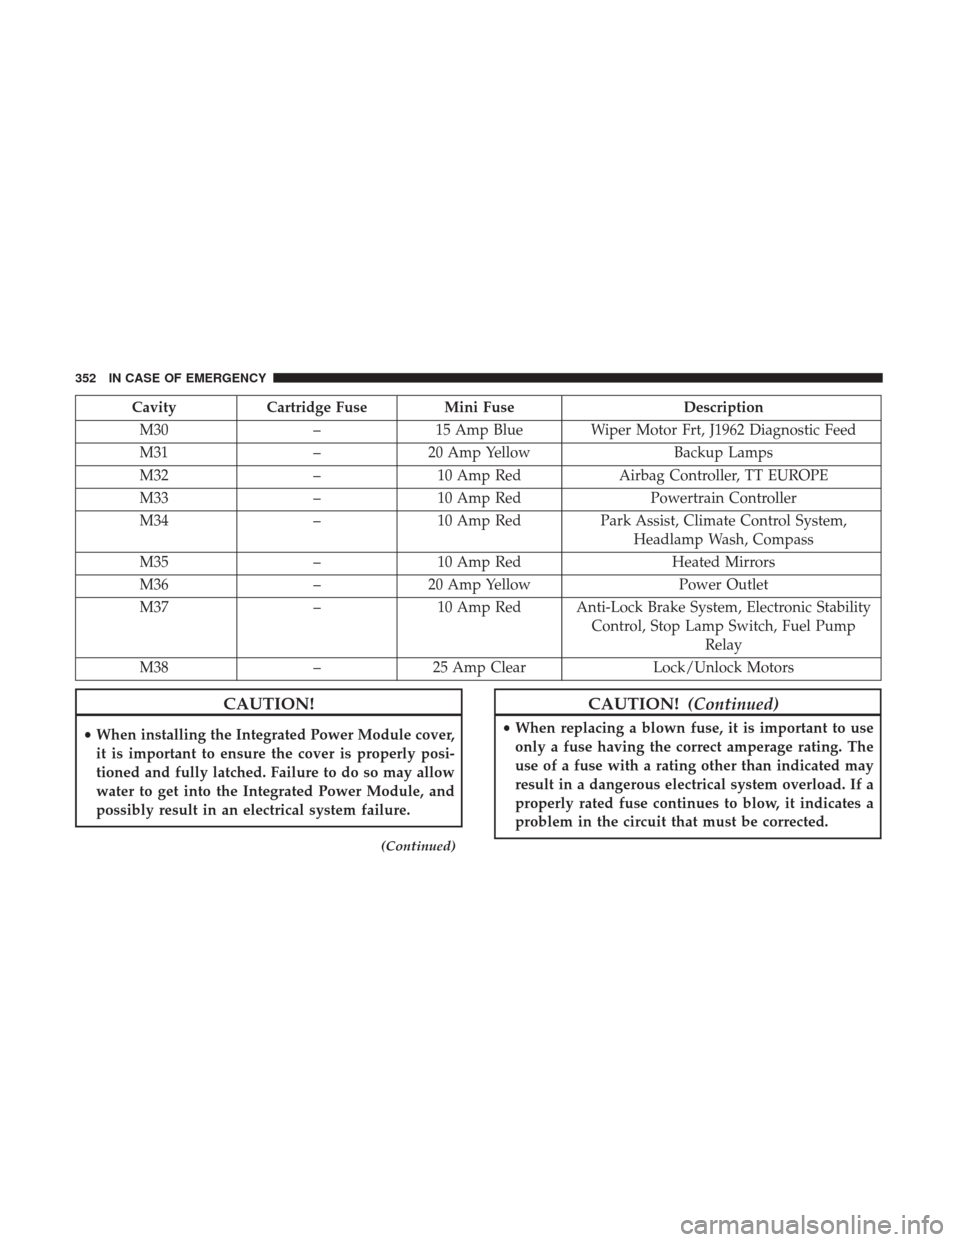 JEEP WRANGLER 2017 JK / 3.G User Guide CavityCartridge Fuse Mini Fuse Description
M30 –15 Amp Blue Wiper Motor Frt, J1962 Diagnostic Feed
M31 –20 Amp Yellow Backup Lamps
M32 –10 Amp Red Airbag Controller, TT EUROPE
M33 –10 Amp Red 